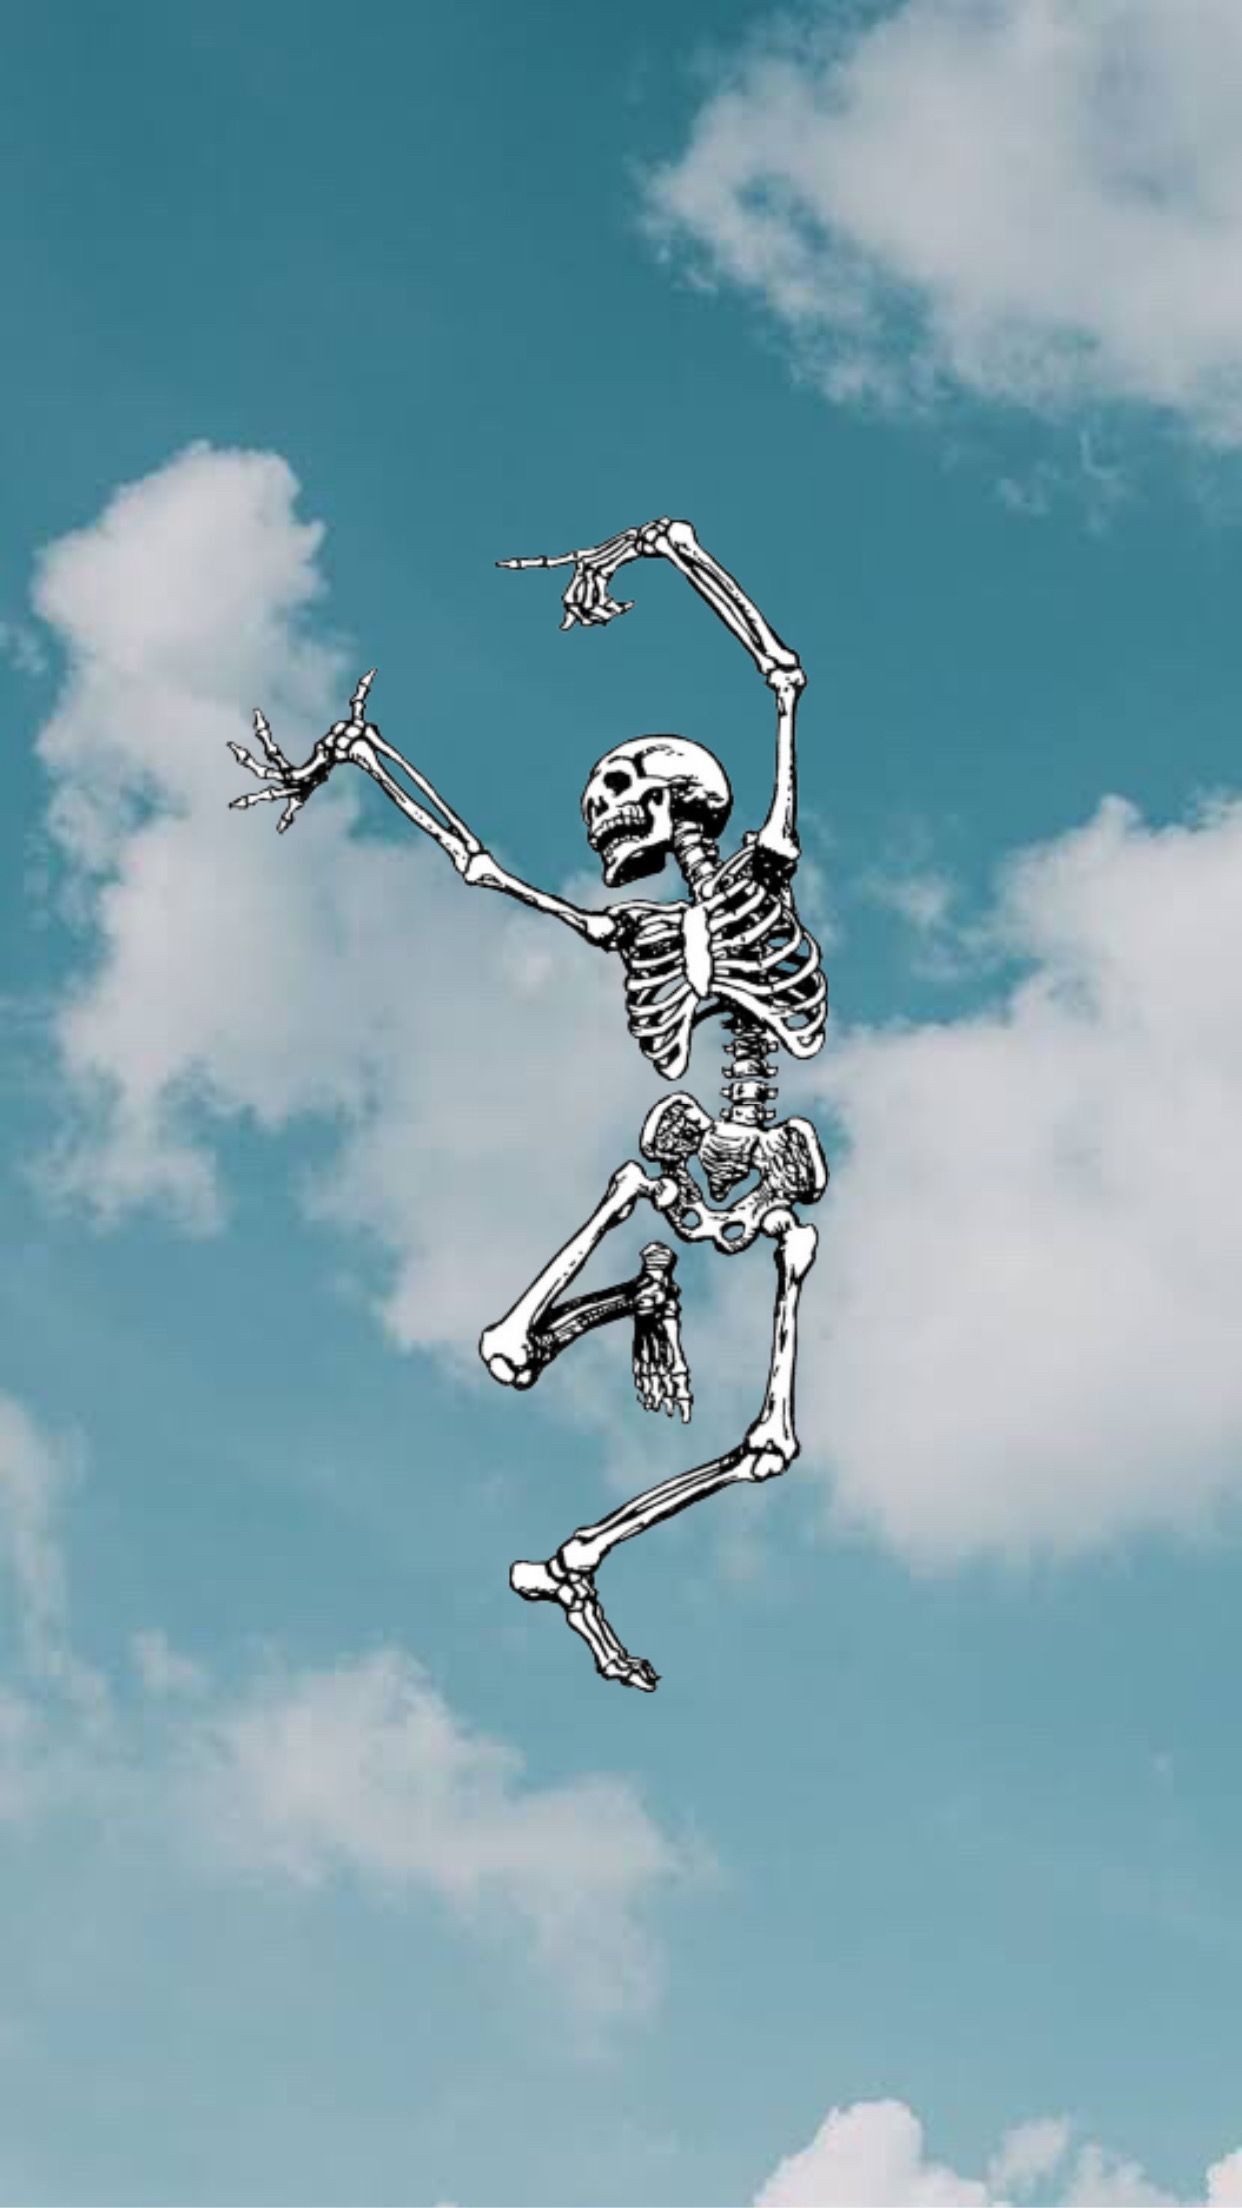 Dancing Skeleton wallpaper background. Art wallpaper iphone, Witchy wallpaper, Dark wallpaper iphone